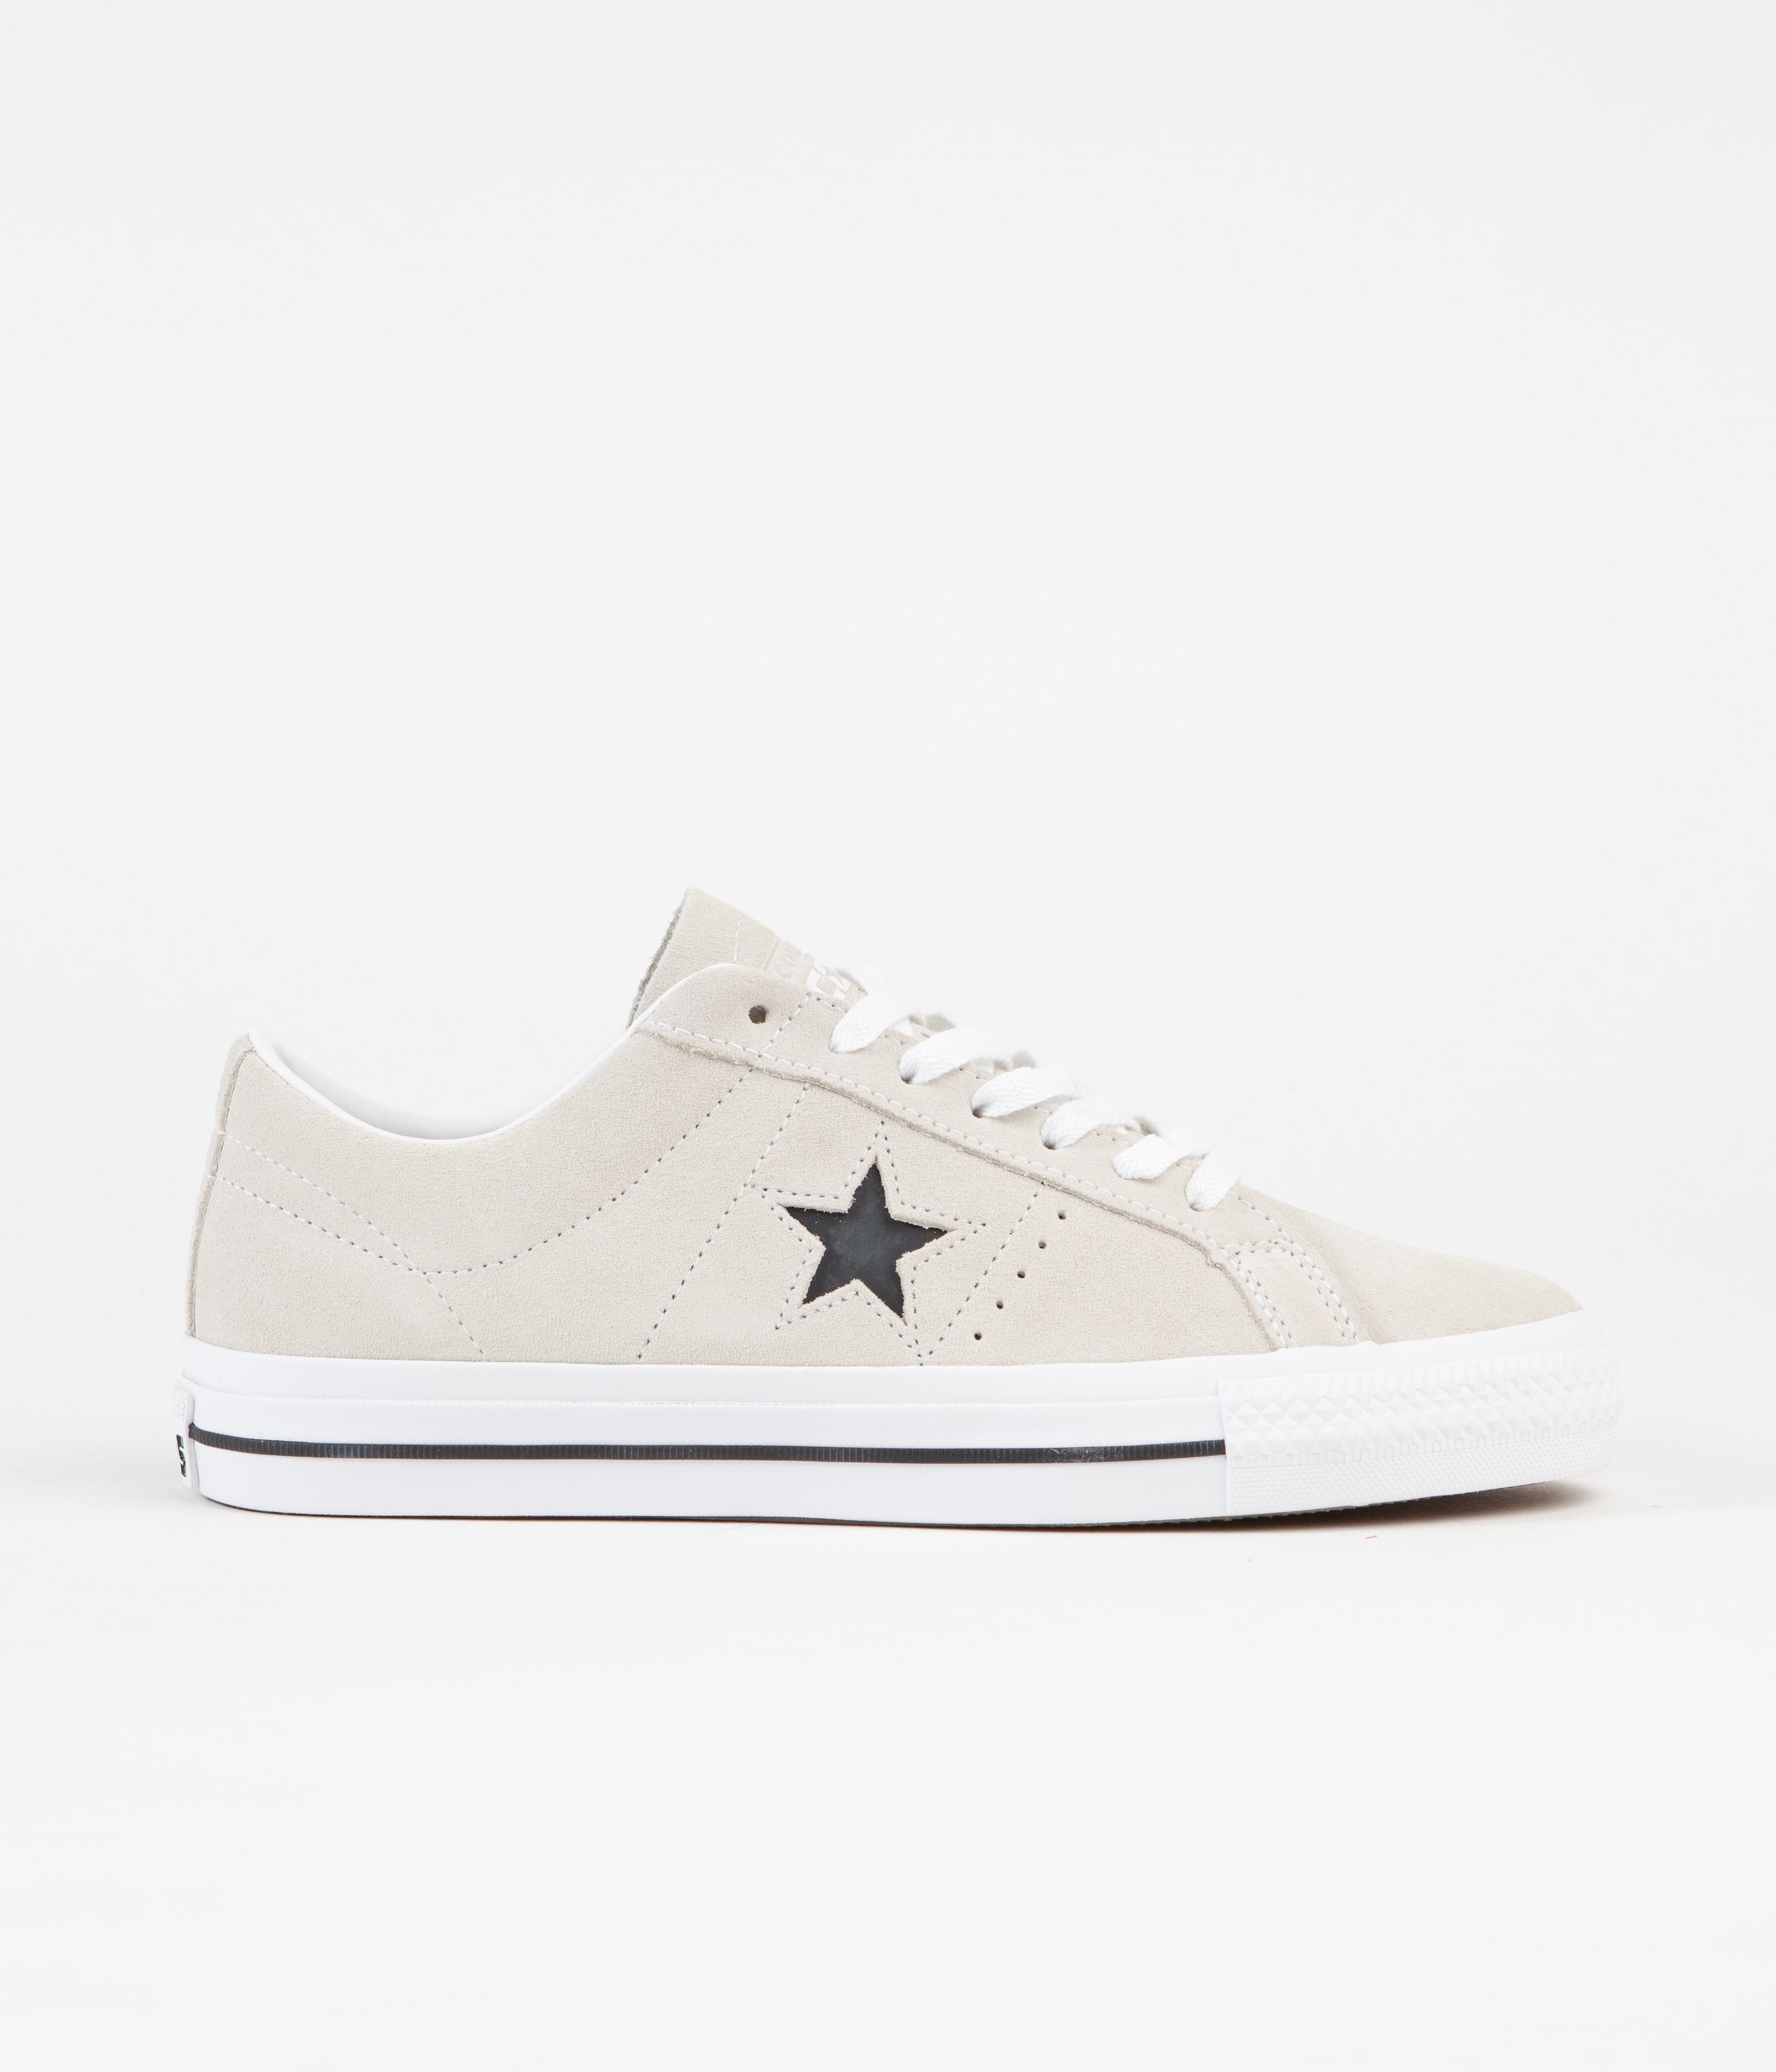 Converse One Star Pro Suede - Egret / White / | Flatspot